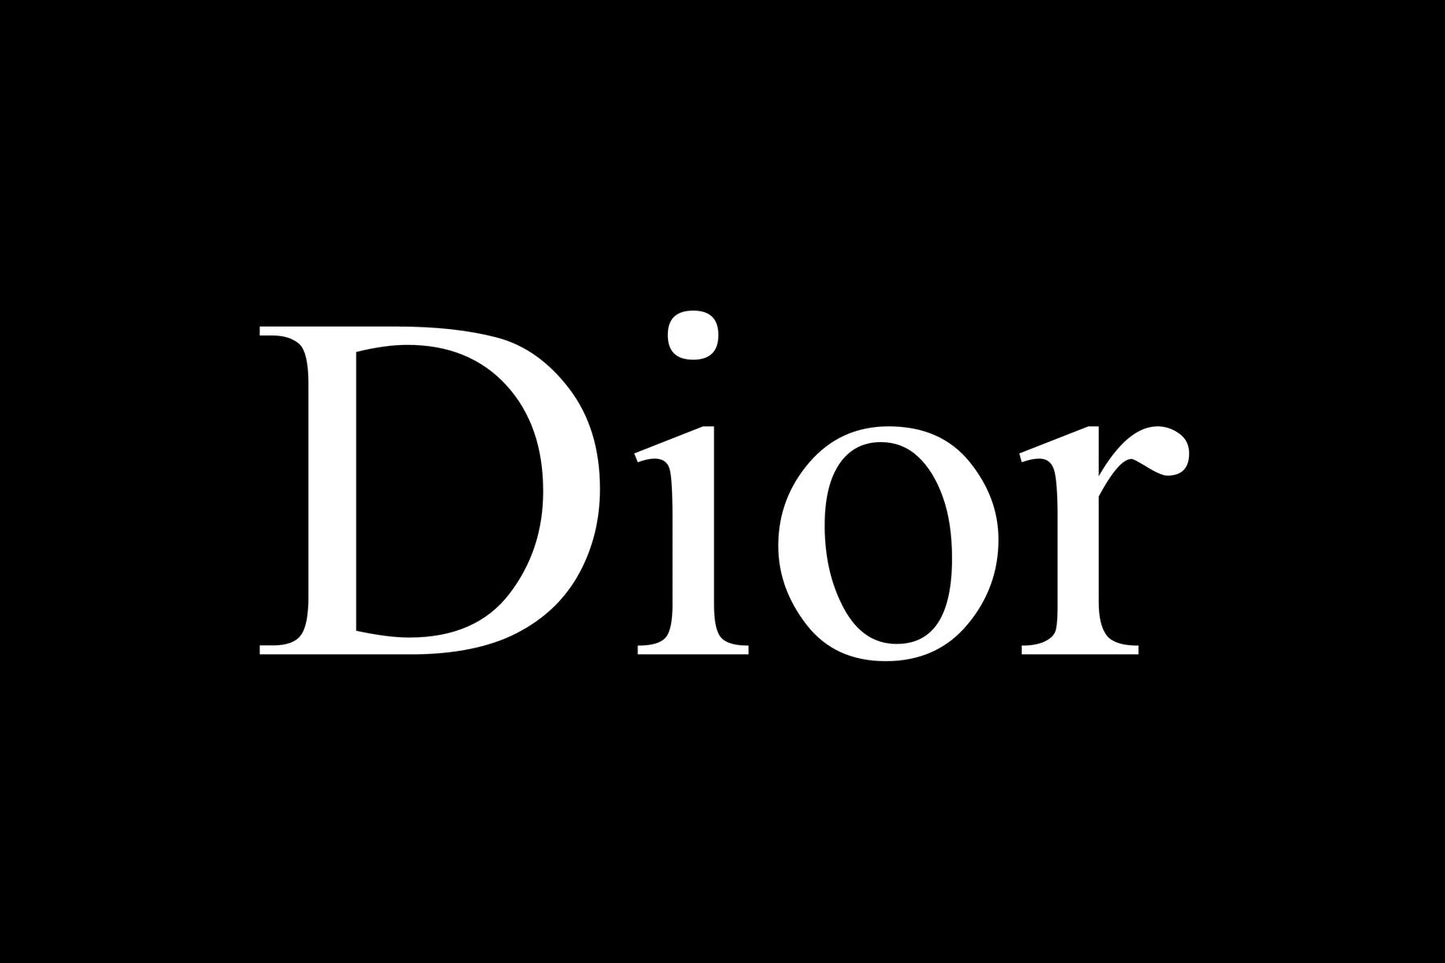 Christian Dior Sauvage Eau De Parfum 3.4 oz 100 oz Men